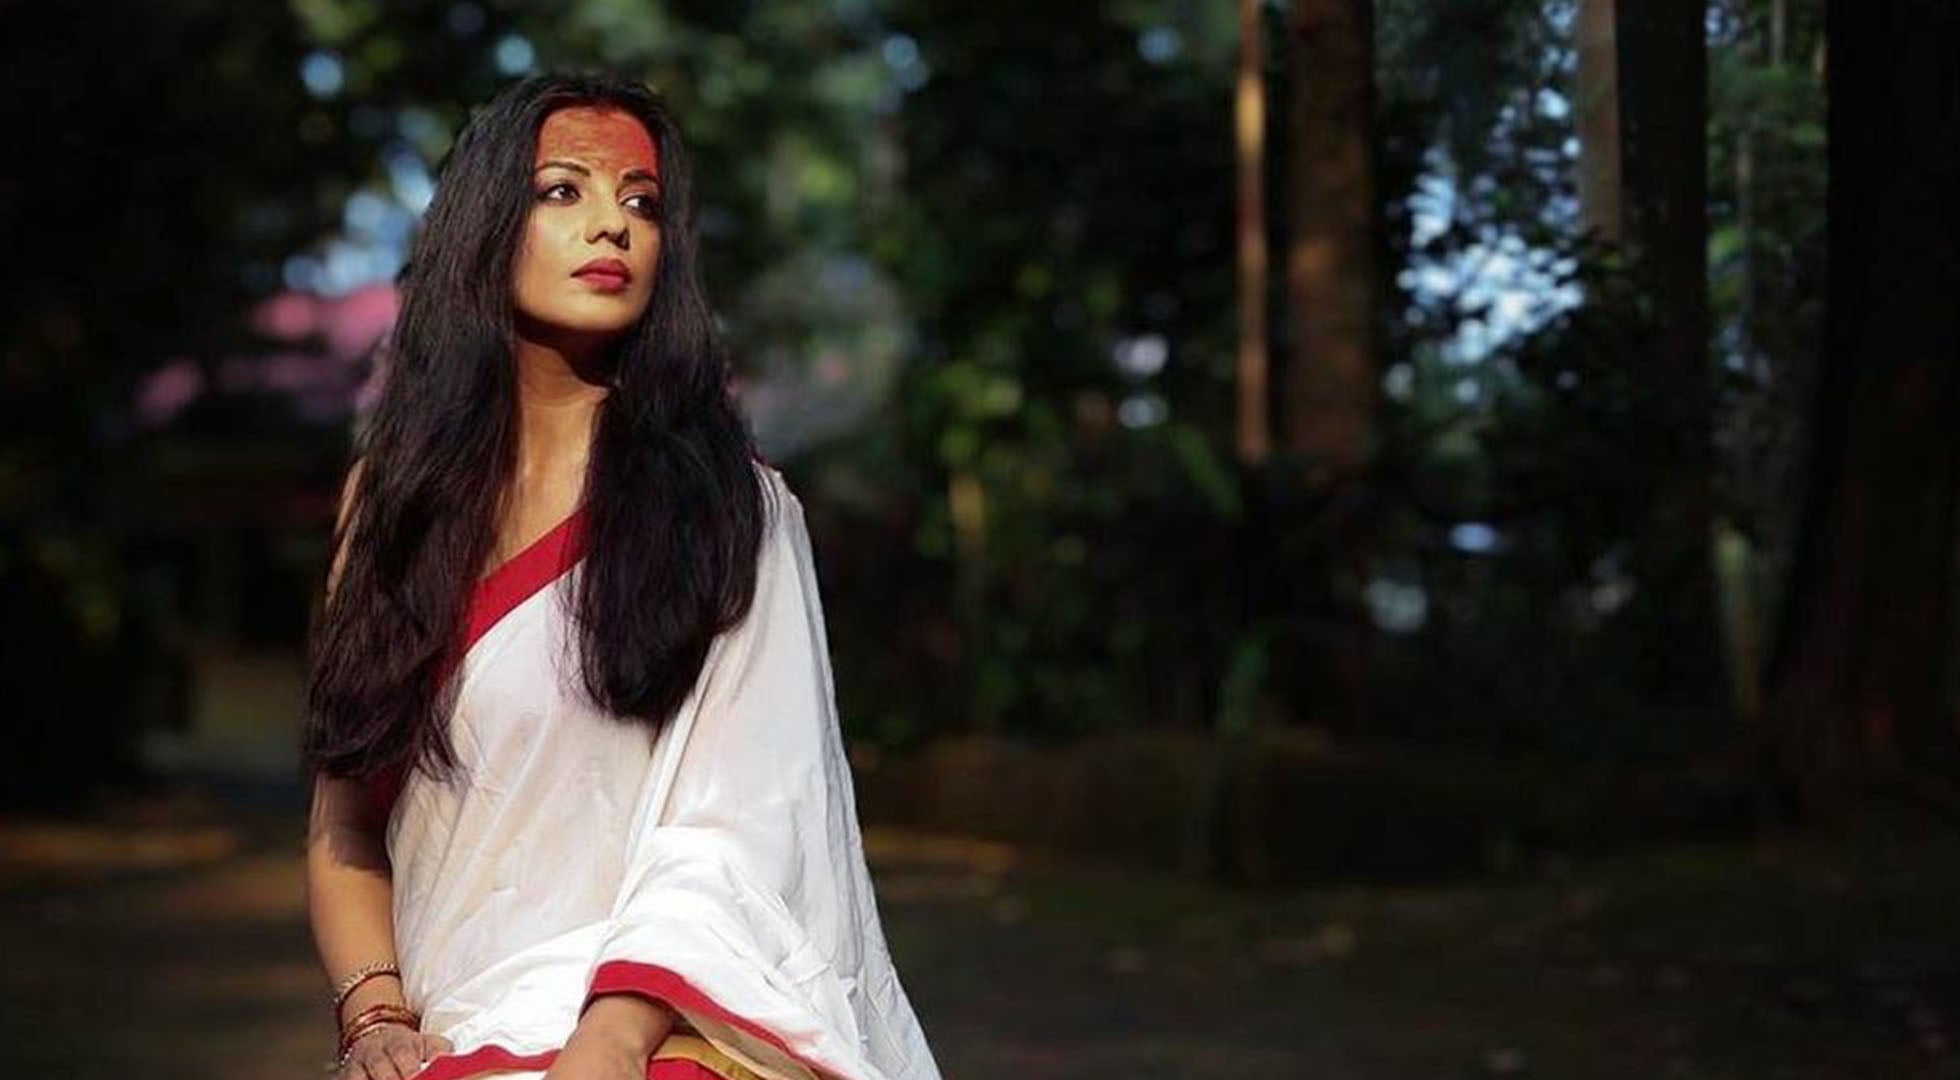  Finding Beauty through Grace- Mugdha Godse, Indian Actress and Model 